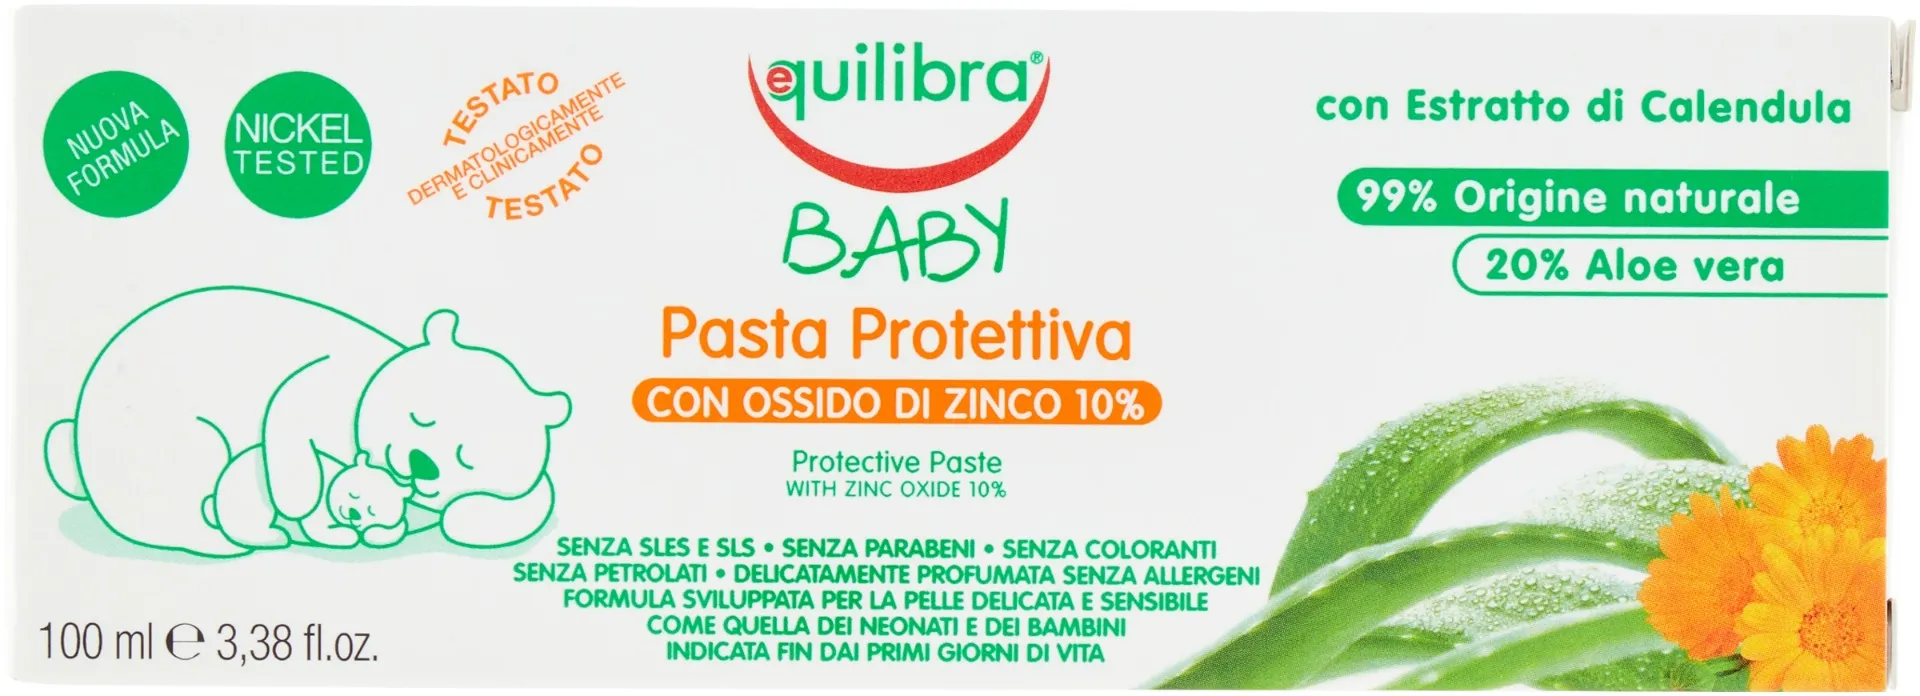 Equilibra Pasta Lenitiva All'Acqua Baby Delicatamente Profumata